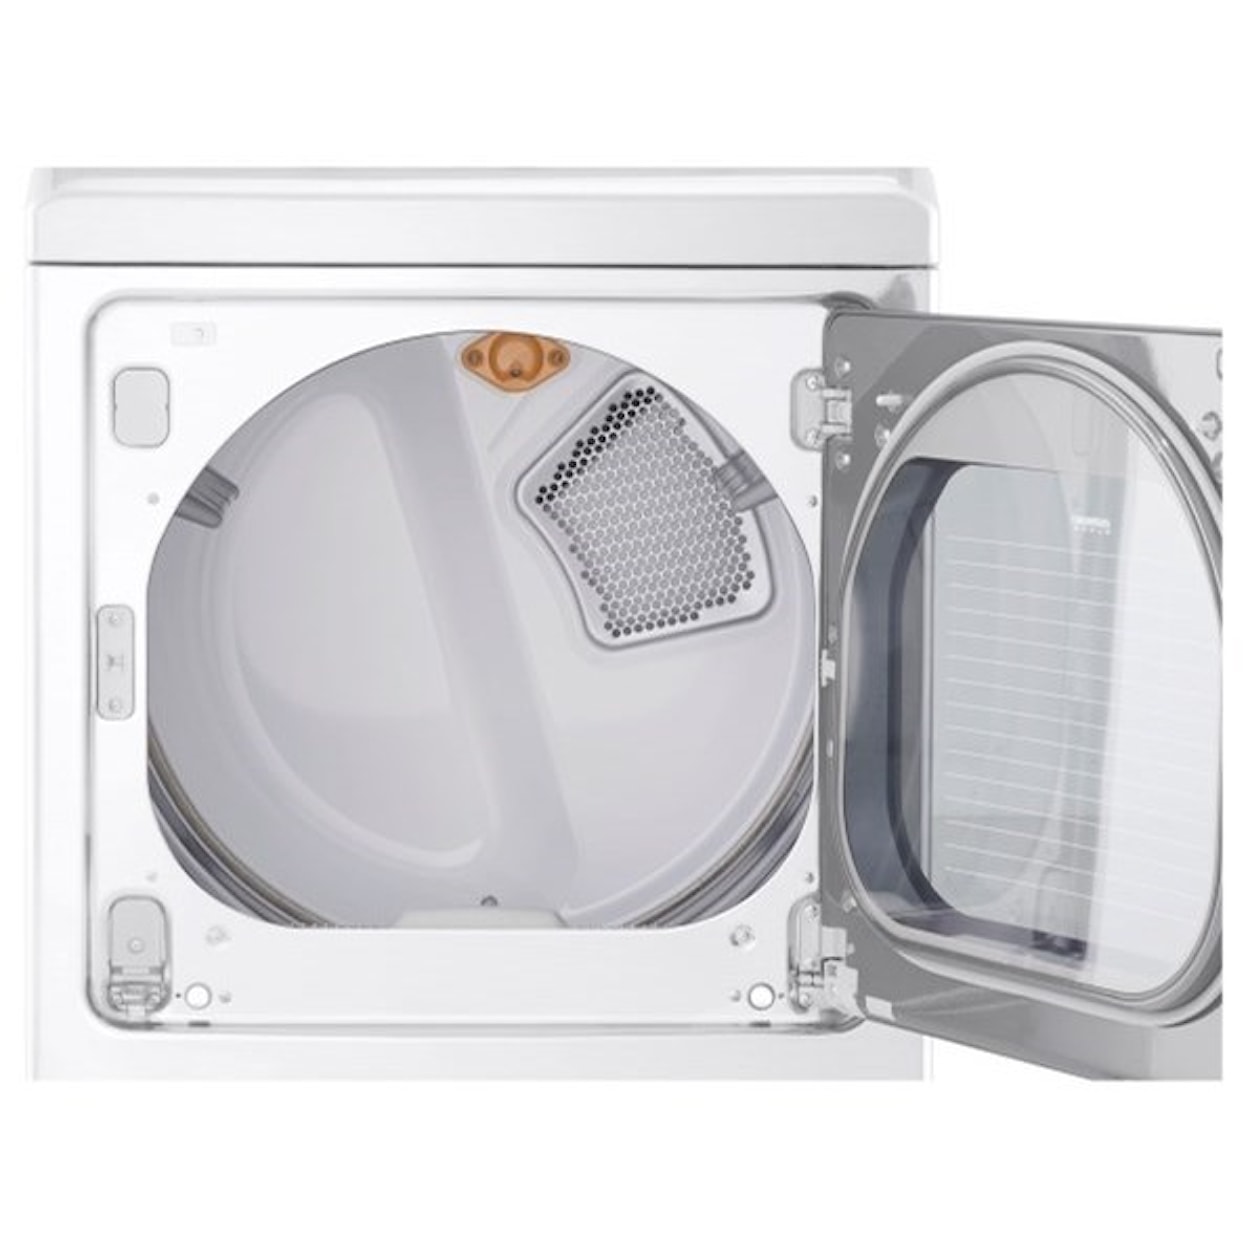 LG Appliances Dryers 7.3 cu. ft. TurboSteam™ Electric Dryer